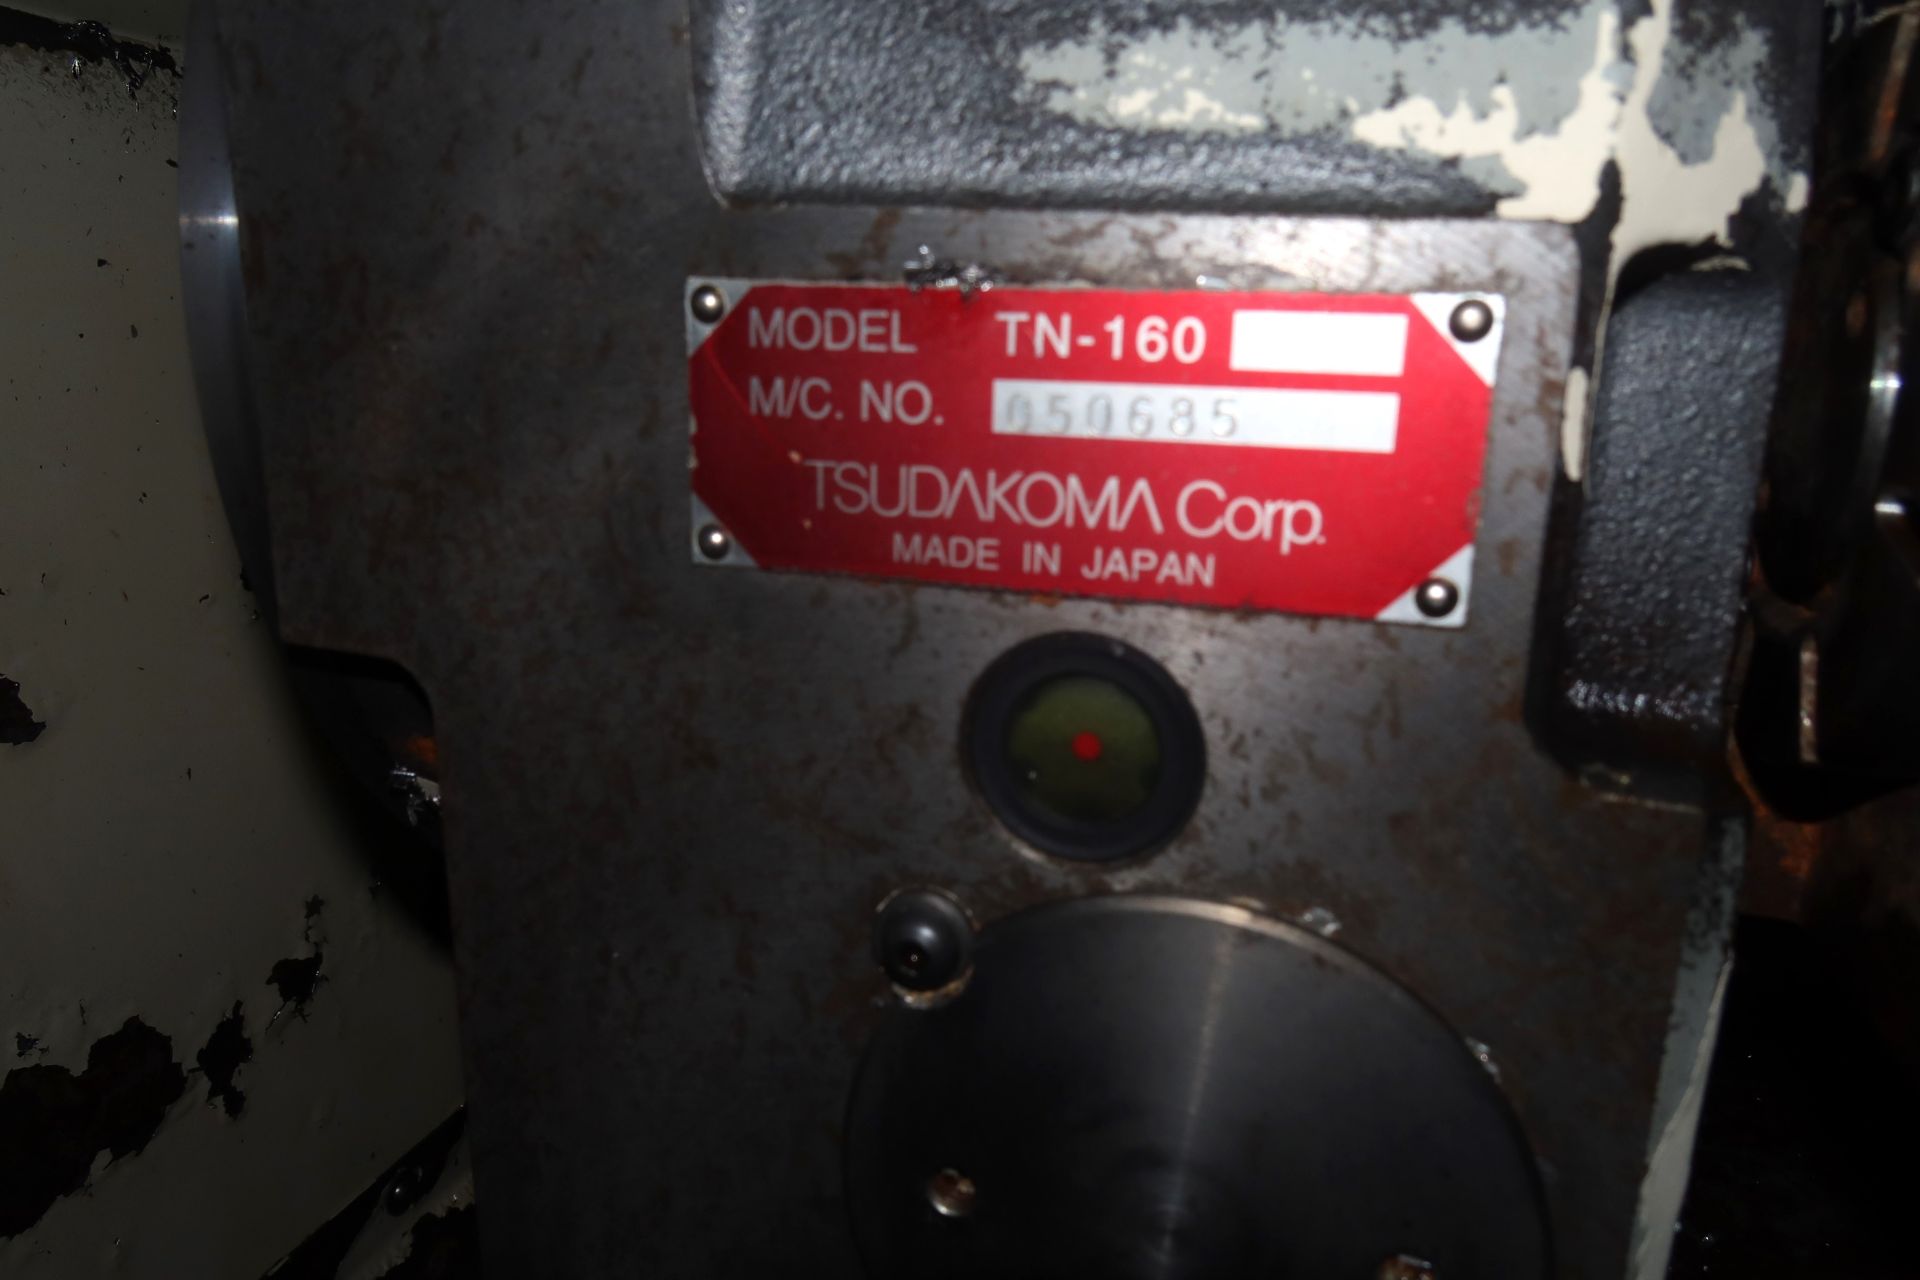 2005 OKUMA MC-V3016 5-AXIS CNC VERTICAL MACHINING CENTER, SN 0139 - Image 6 of 12